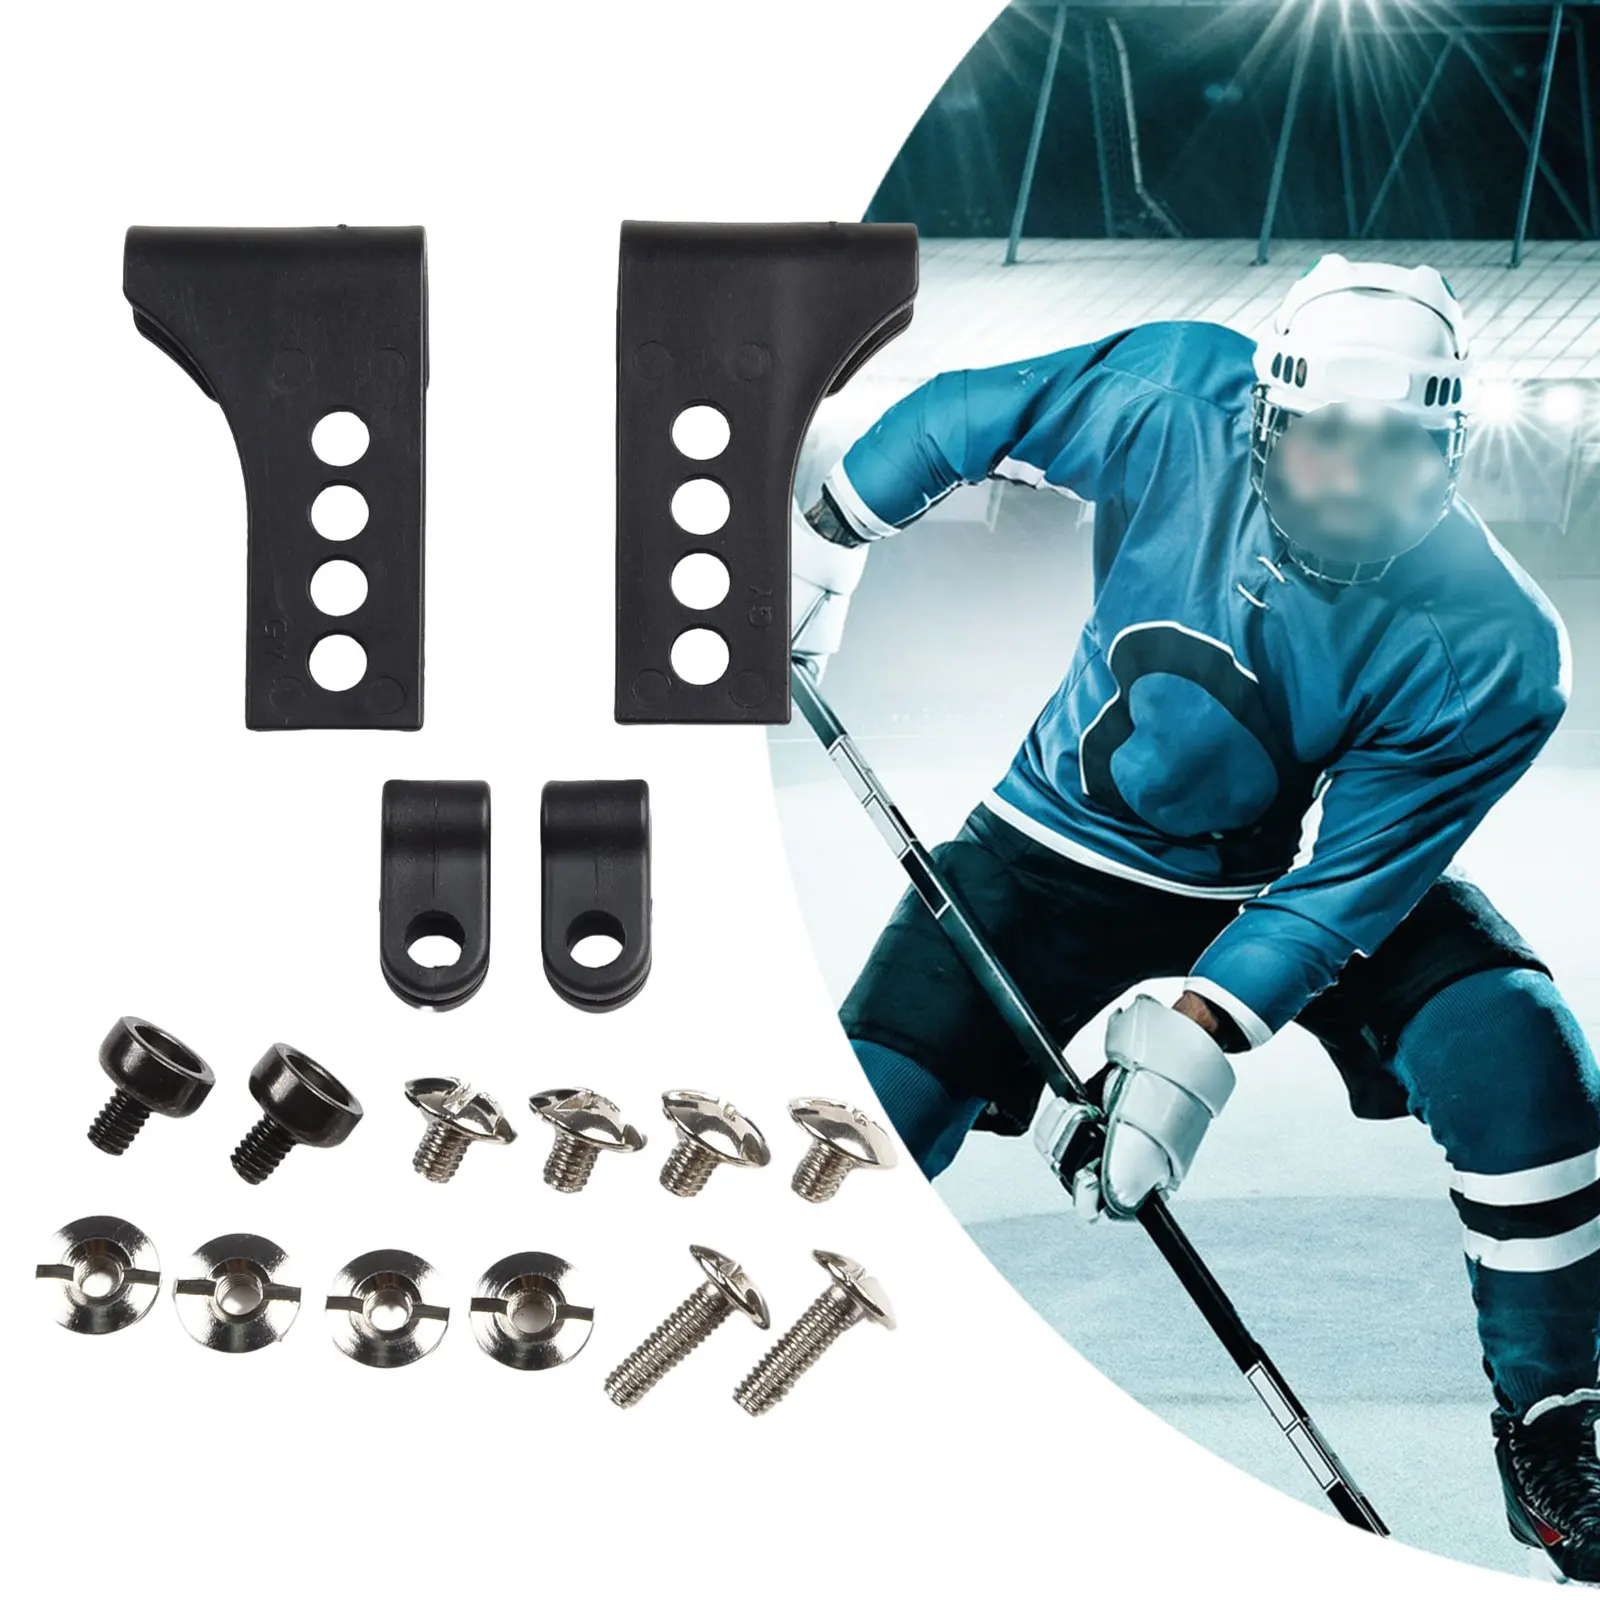 

1set Helmet Repair Kit Visor Clip J Clips For Hockey Baseball Football Softball Universal Plastic Metal Durable Team Sports Part